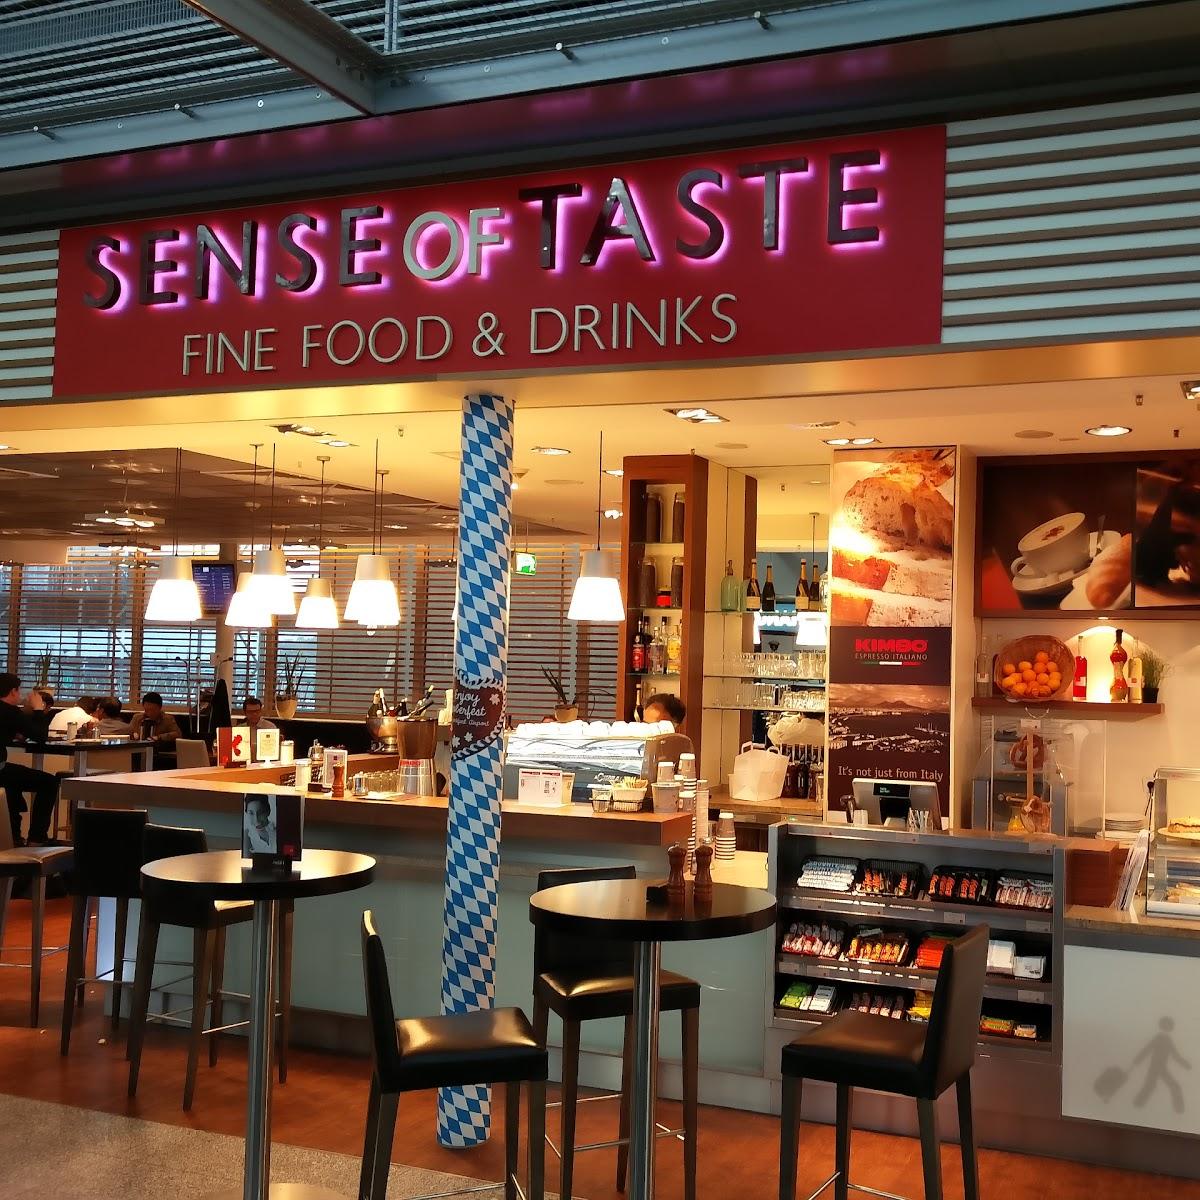 Restaurant "Sense of Taste" in Frankfurt am Main